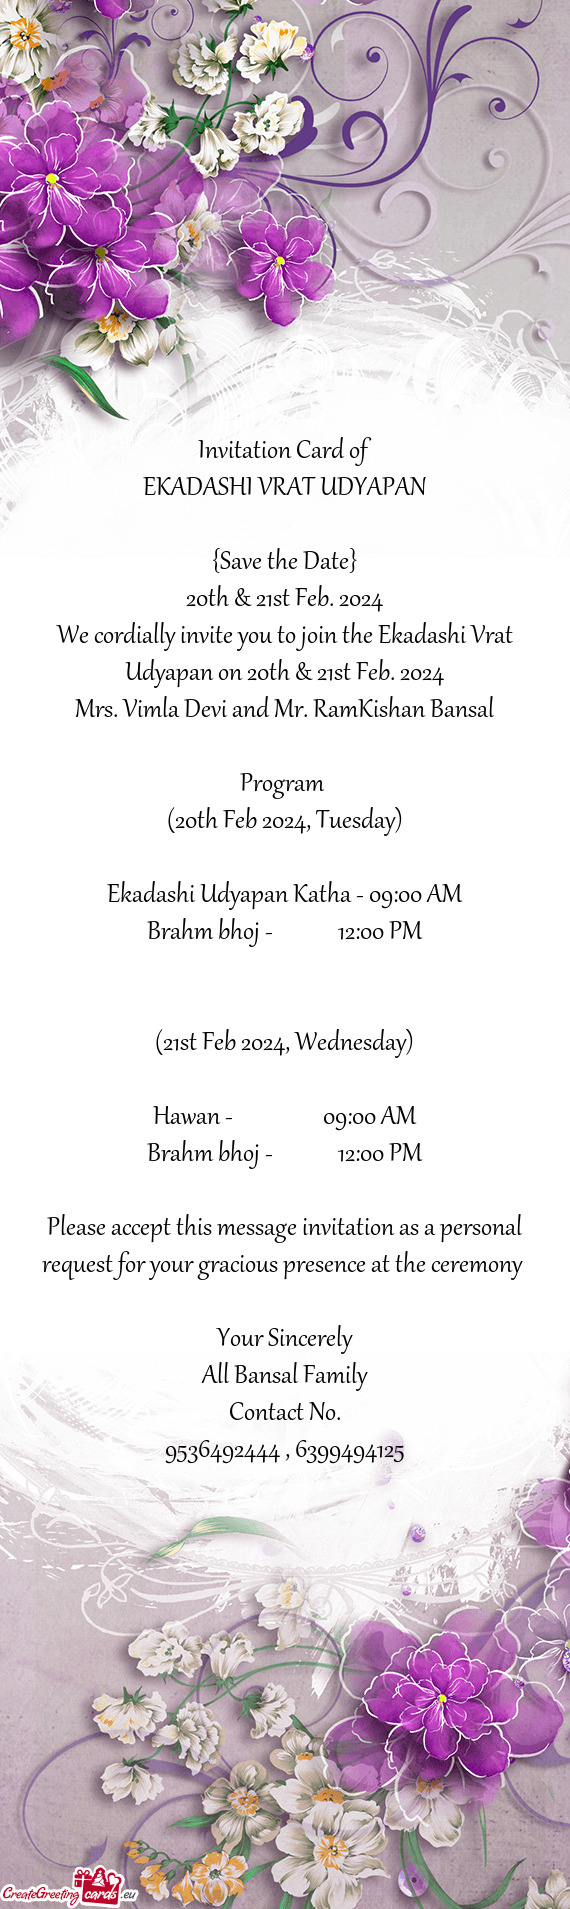 We cordially invite you to join the Ekadashi Vrat Udyapan on 20th & 21st Feb. 2024